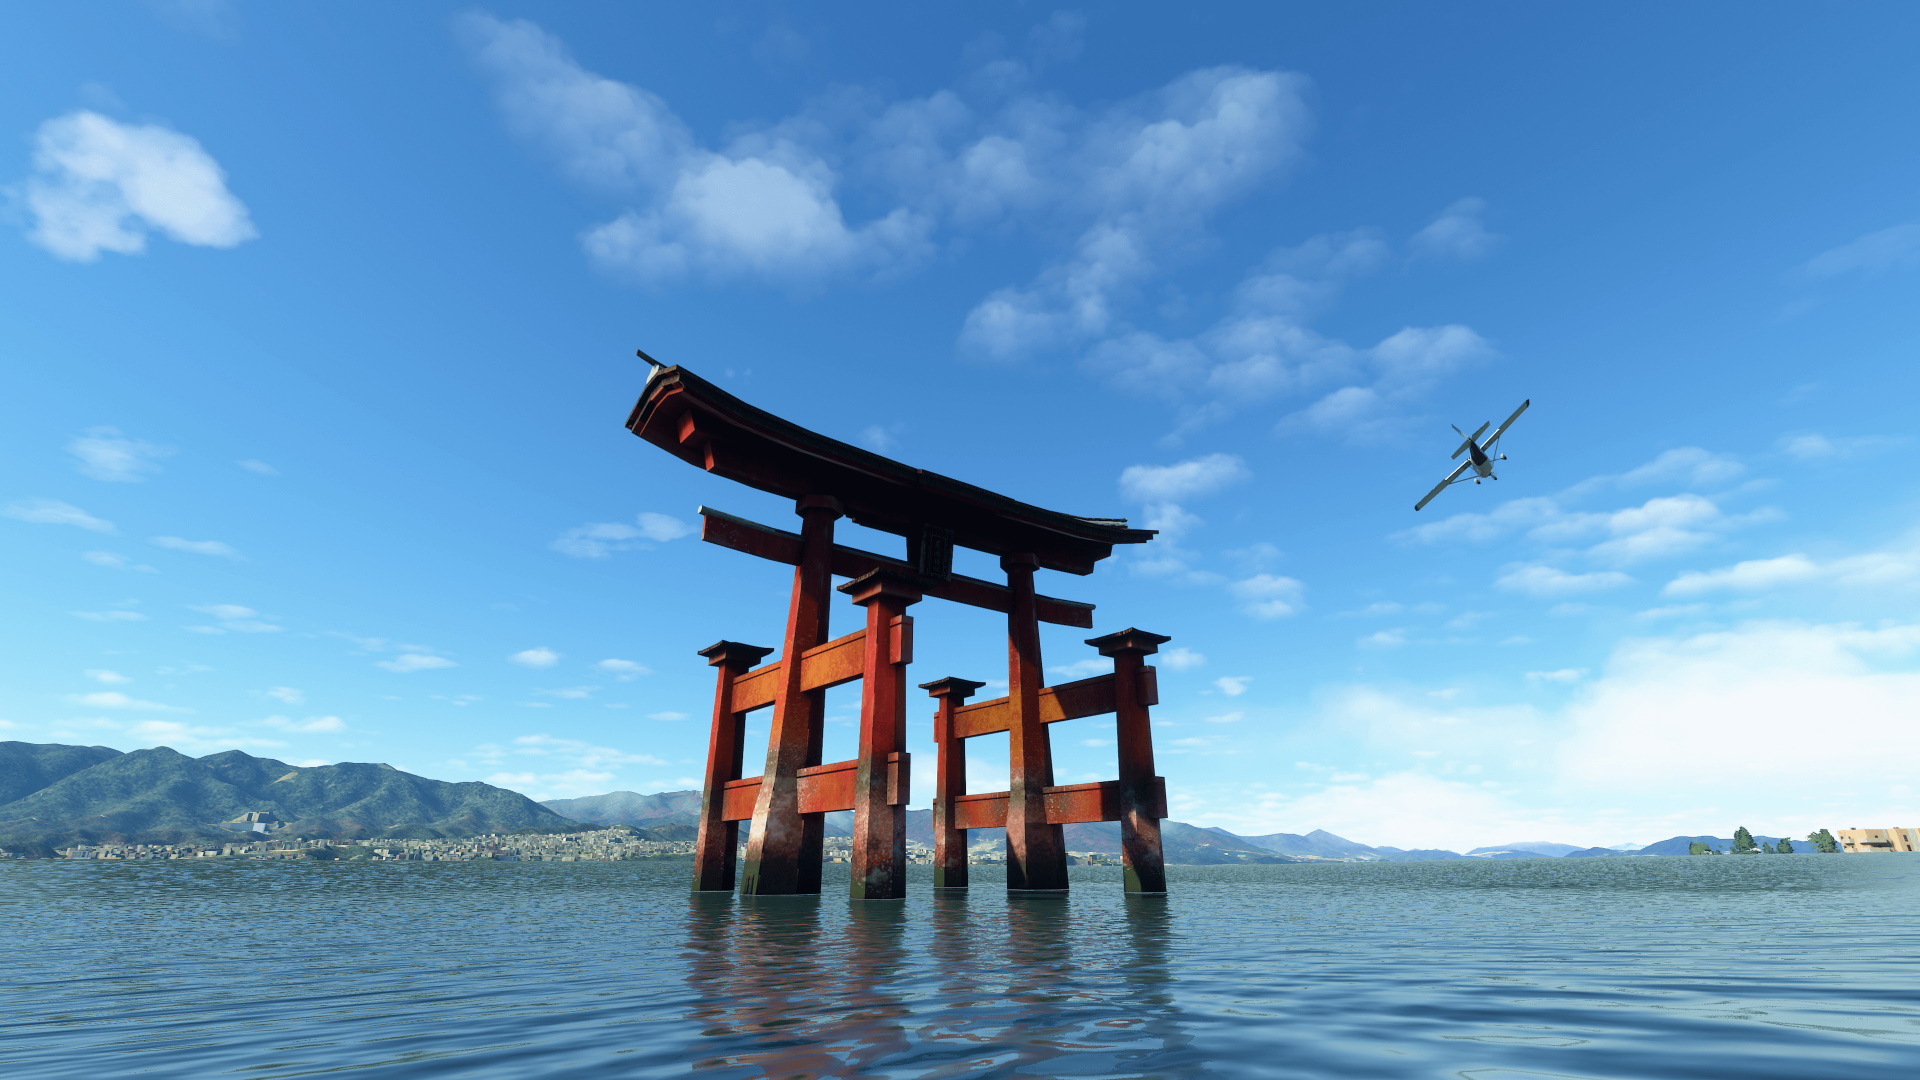 miicrosoft-flight-simulator's-world-update-all-about-japan.jpg